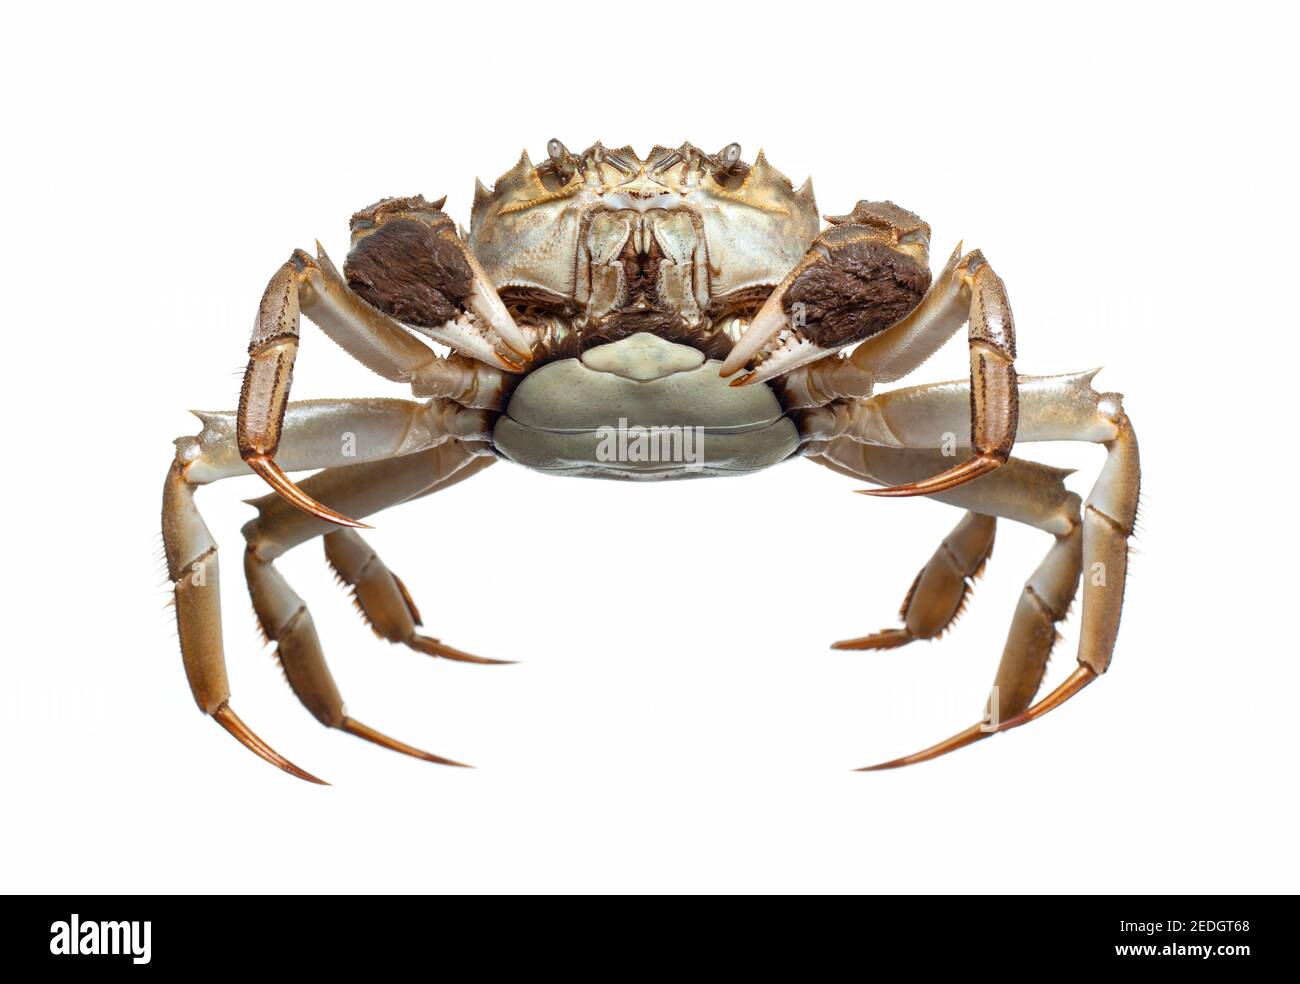 Crabe chinois isolé sur fond blanc Banque D'Images